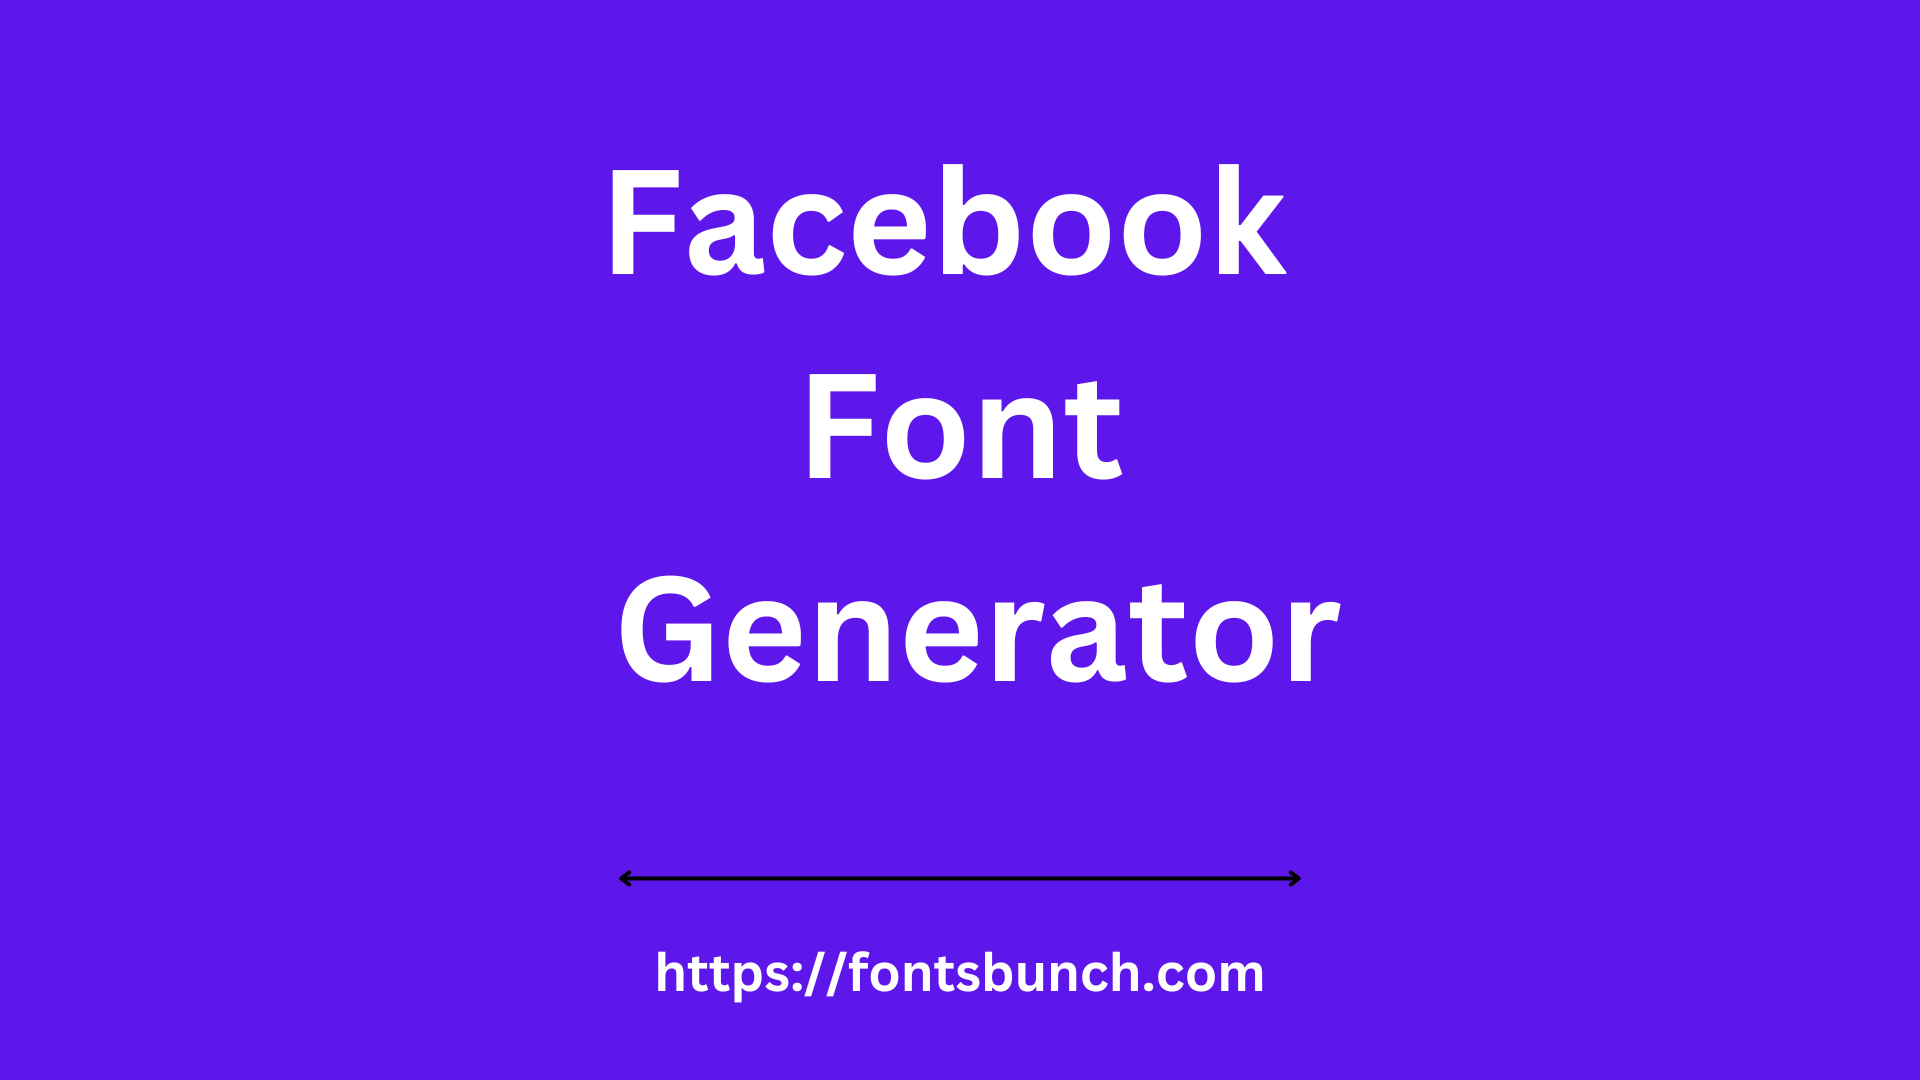 Facebook Fonts Generator ➜#𝟙😍⚡ Copy ✂ ⓐⓝⓓ Paste 💕